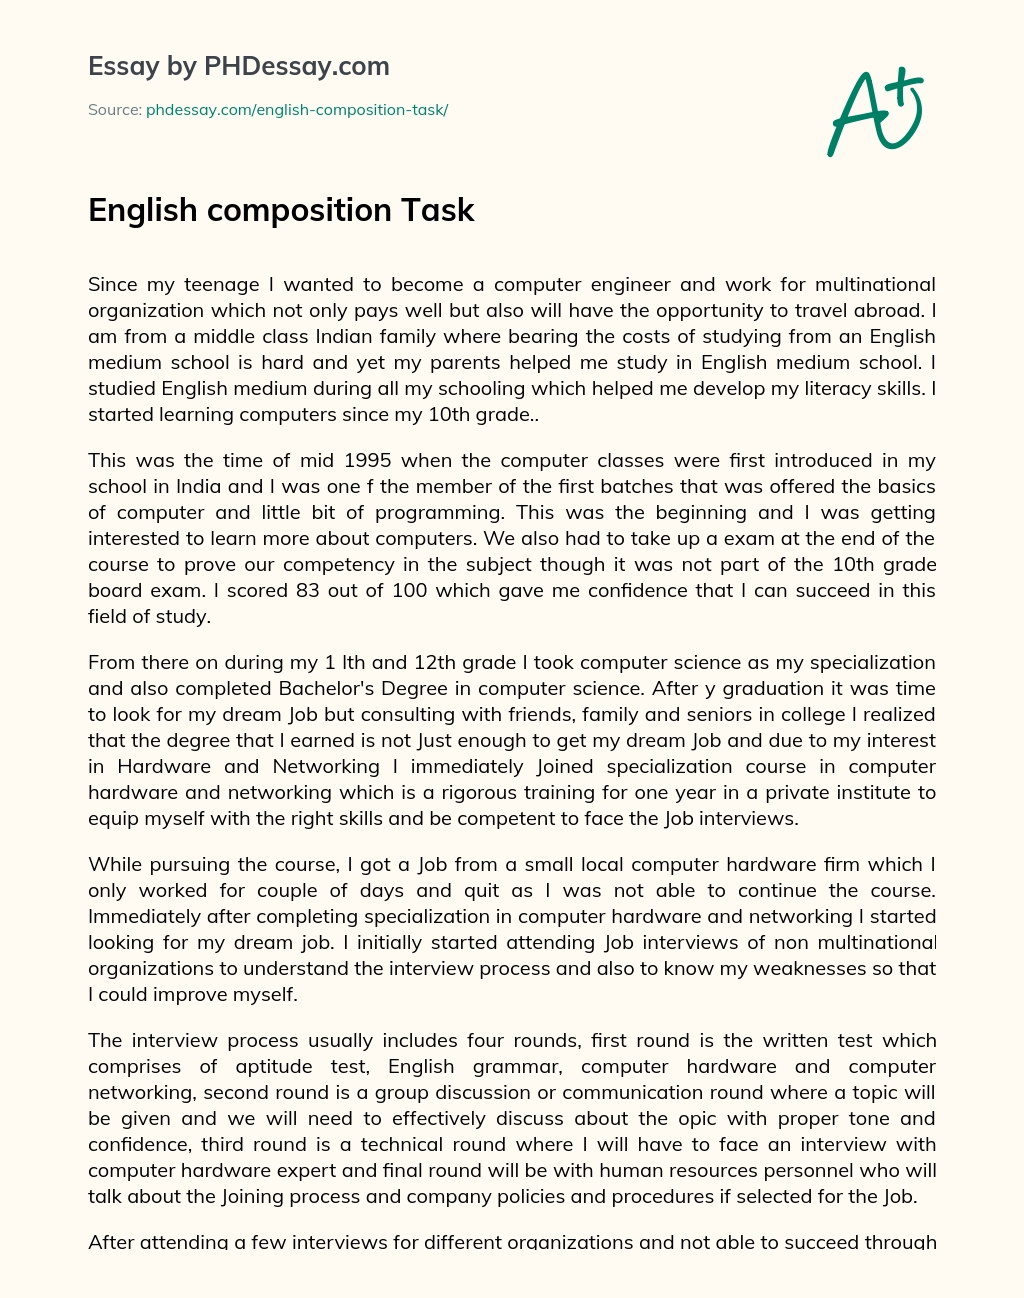 English composition Task essay